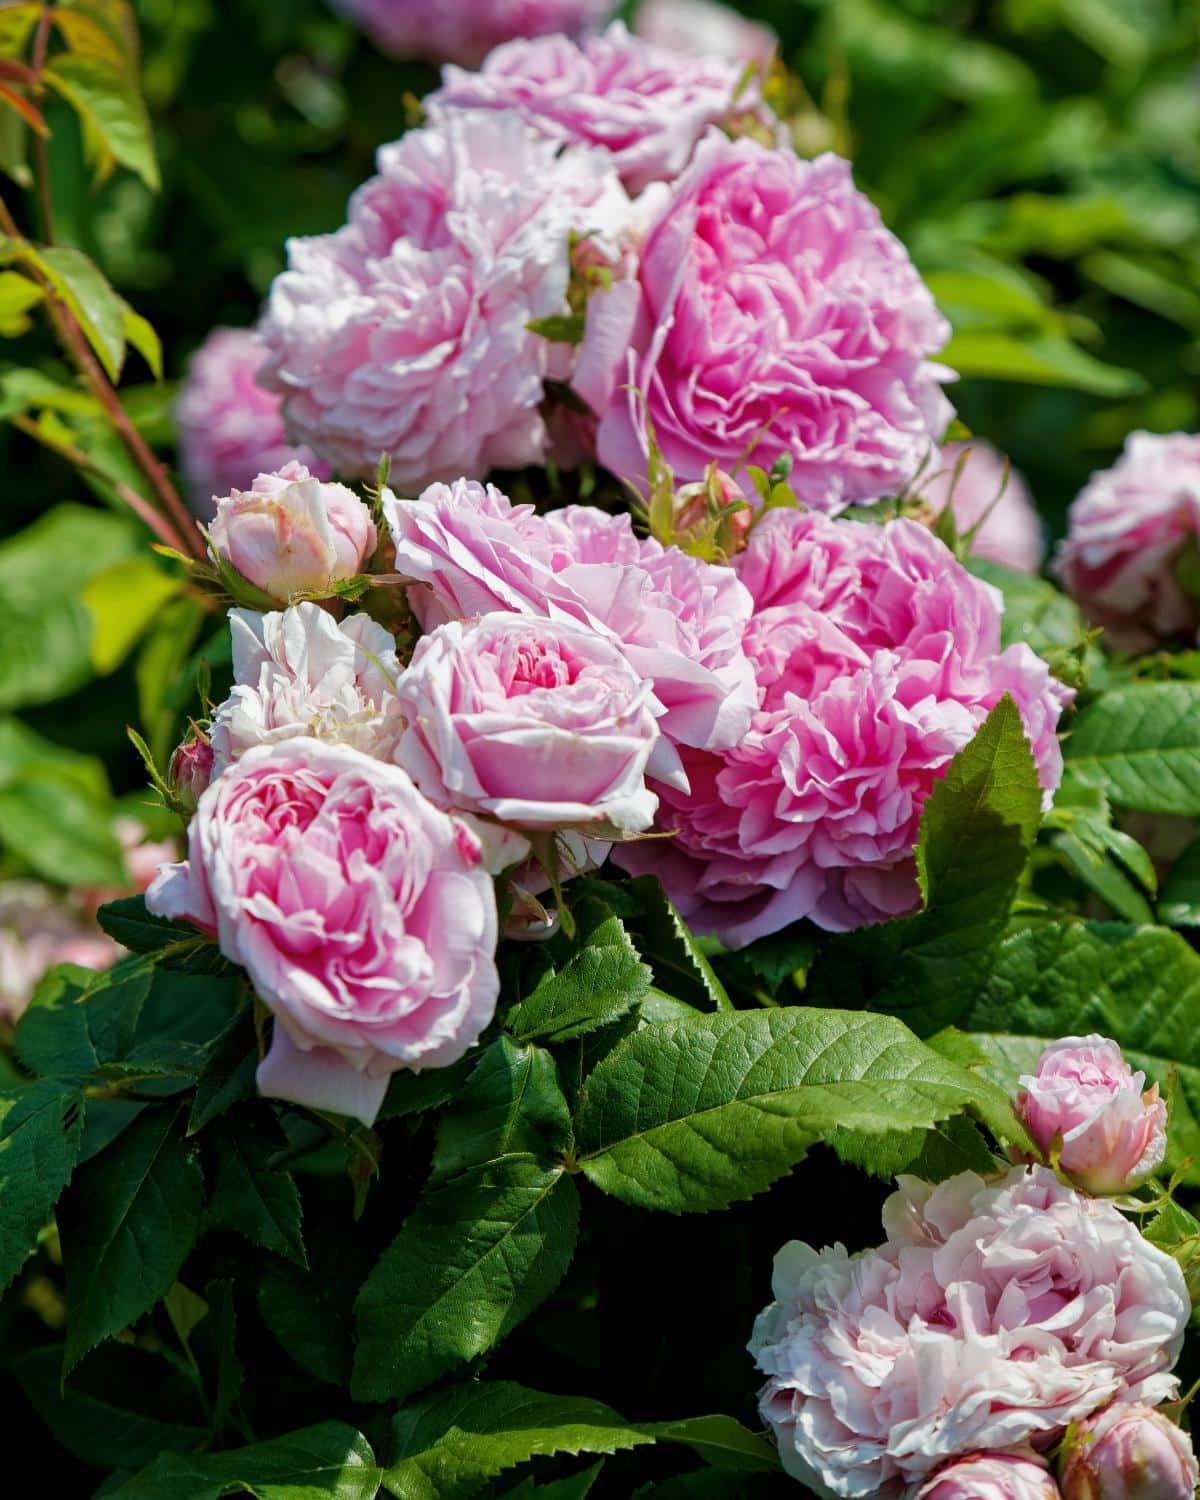 ‘Comte de Chambord' rose variety